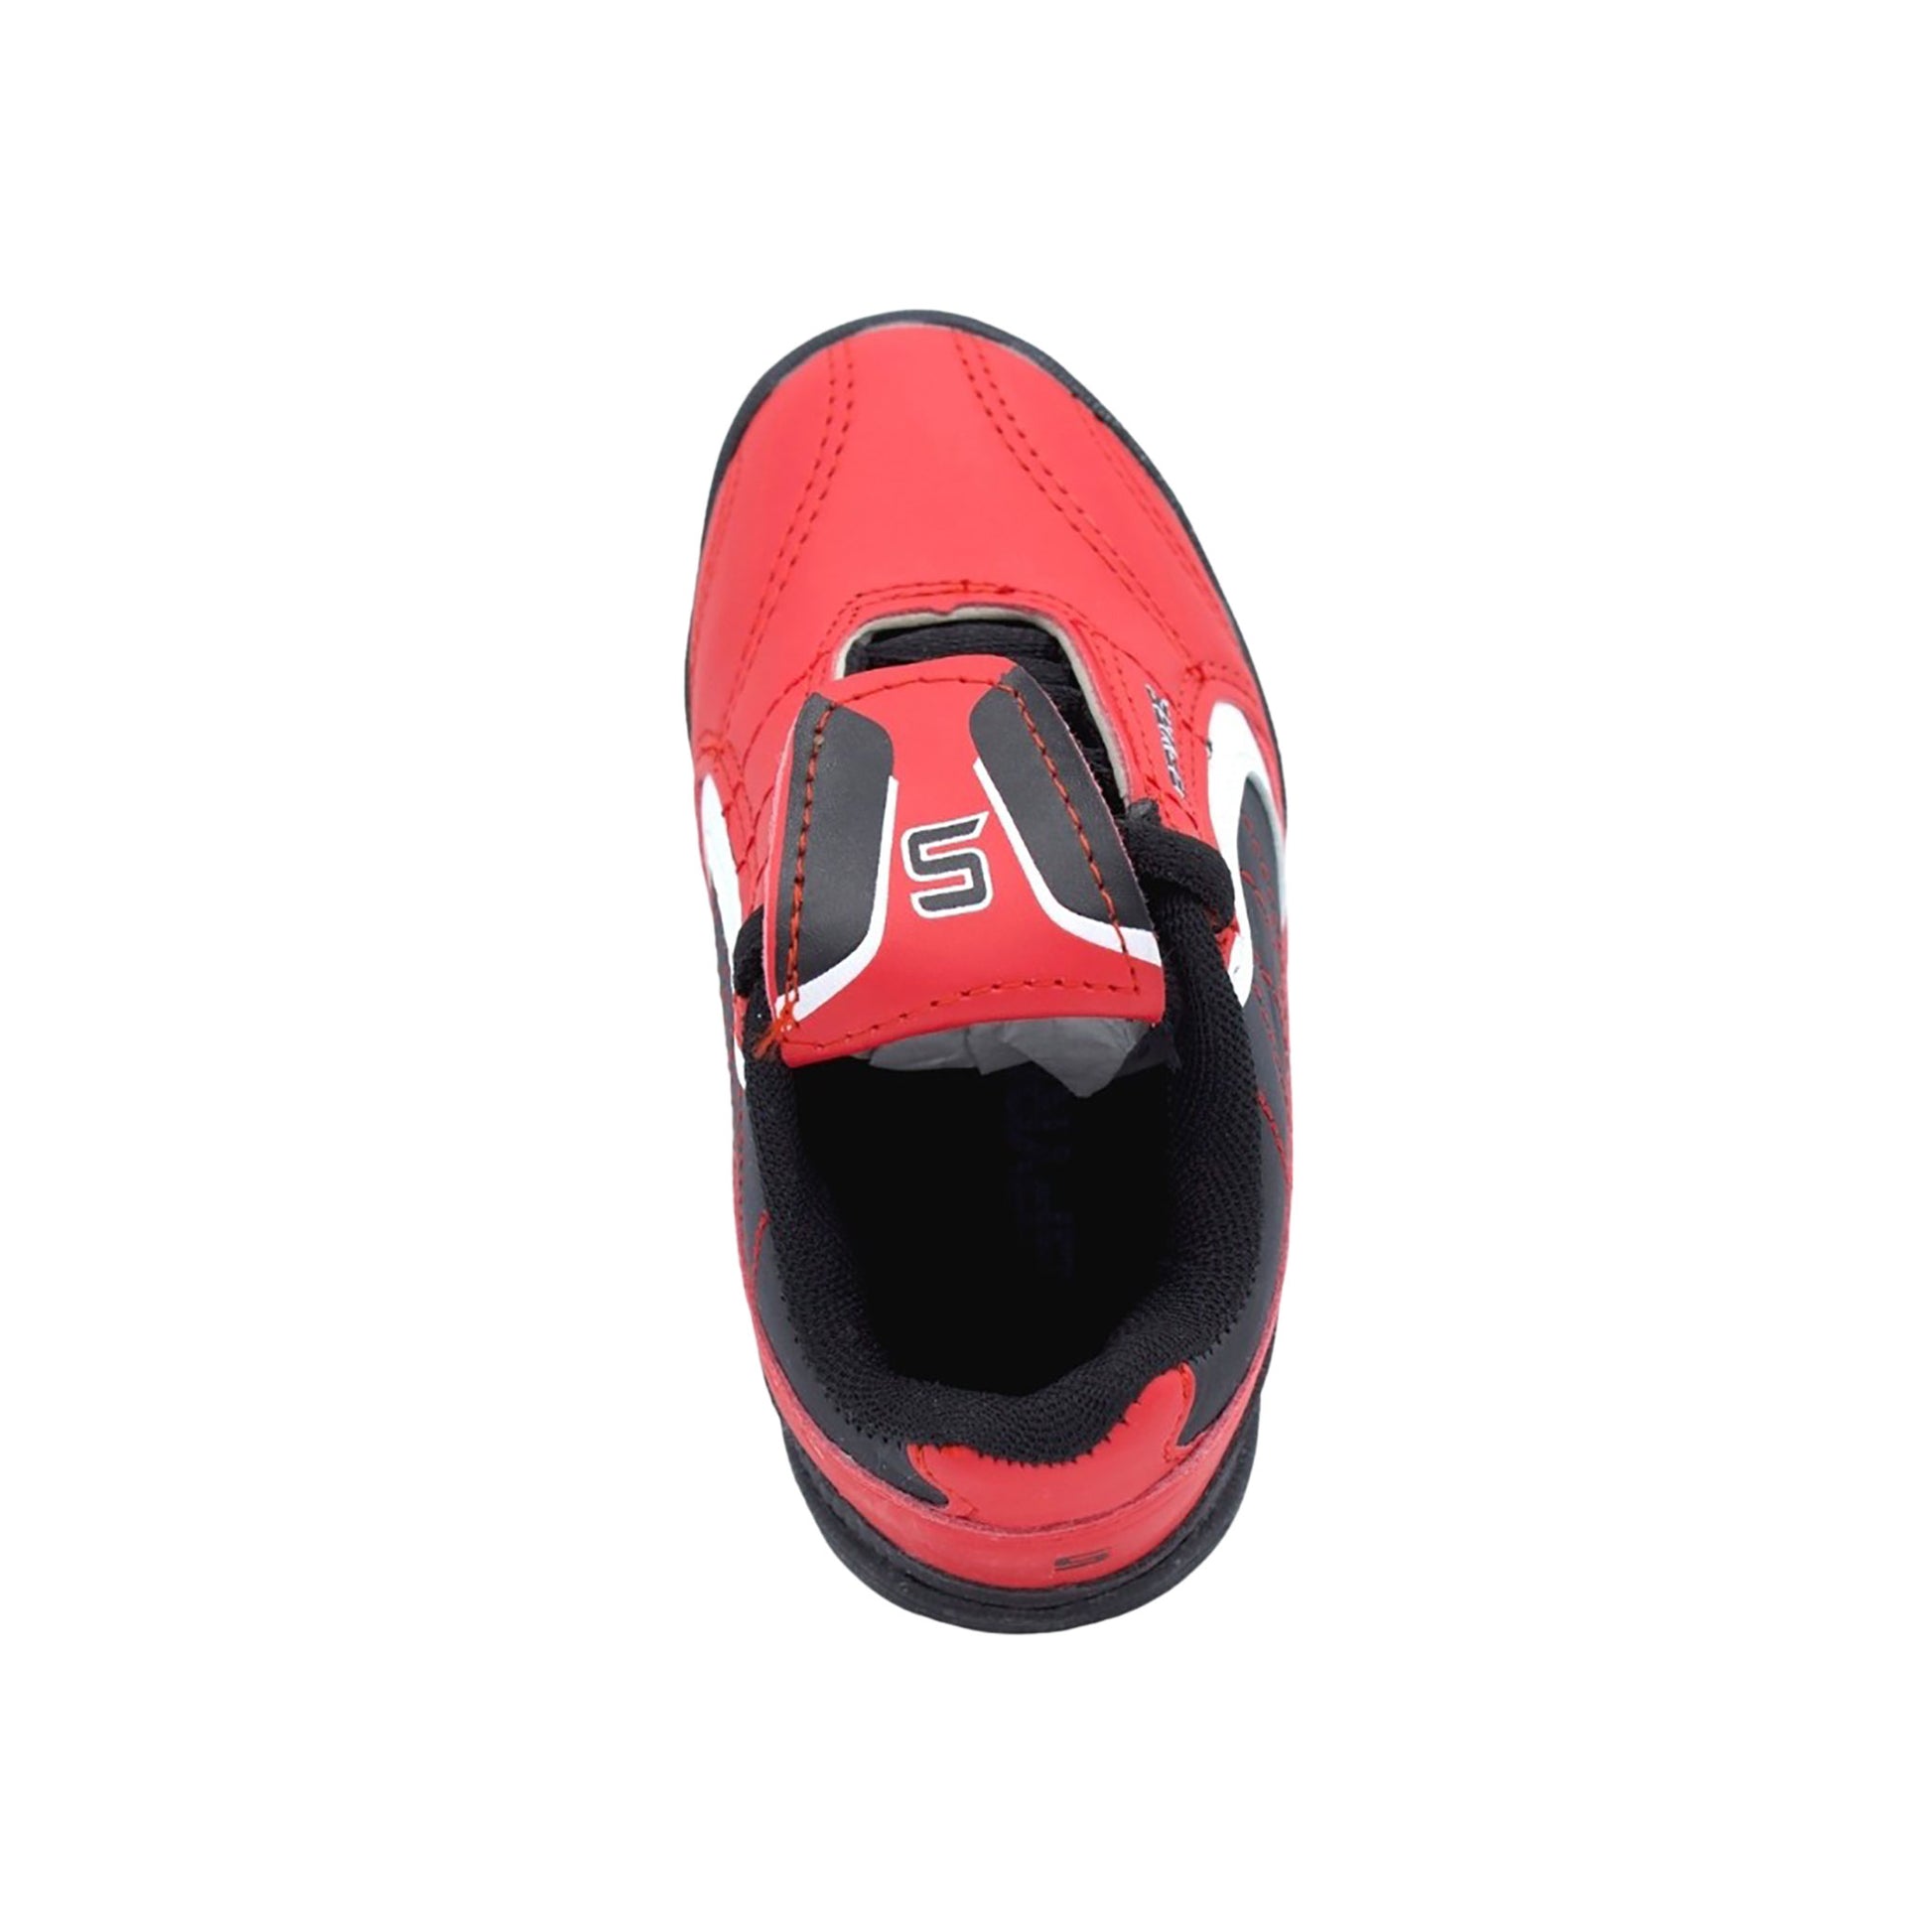 Speedstar Junior Turf Soccer Shoes | EvangelistaSports.com | Canada's Premiere Soccer Store